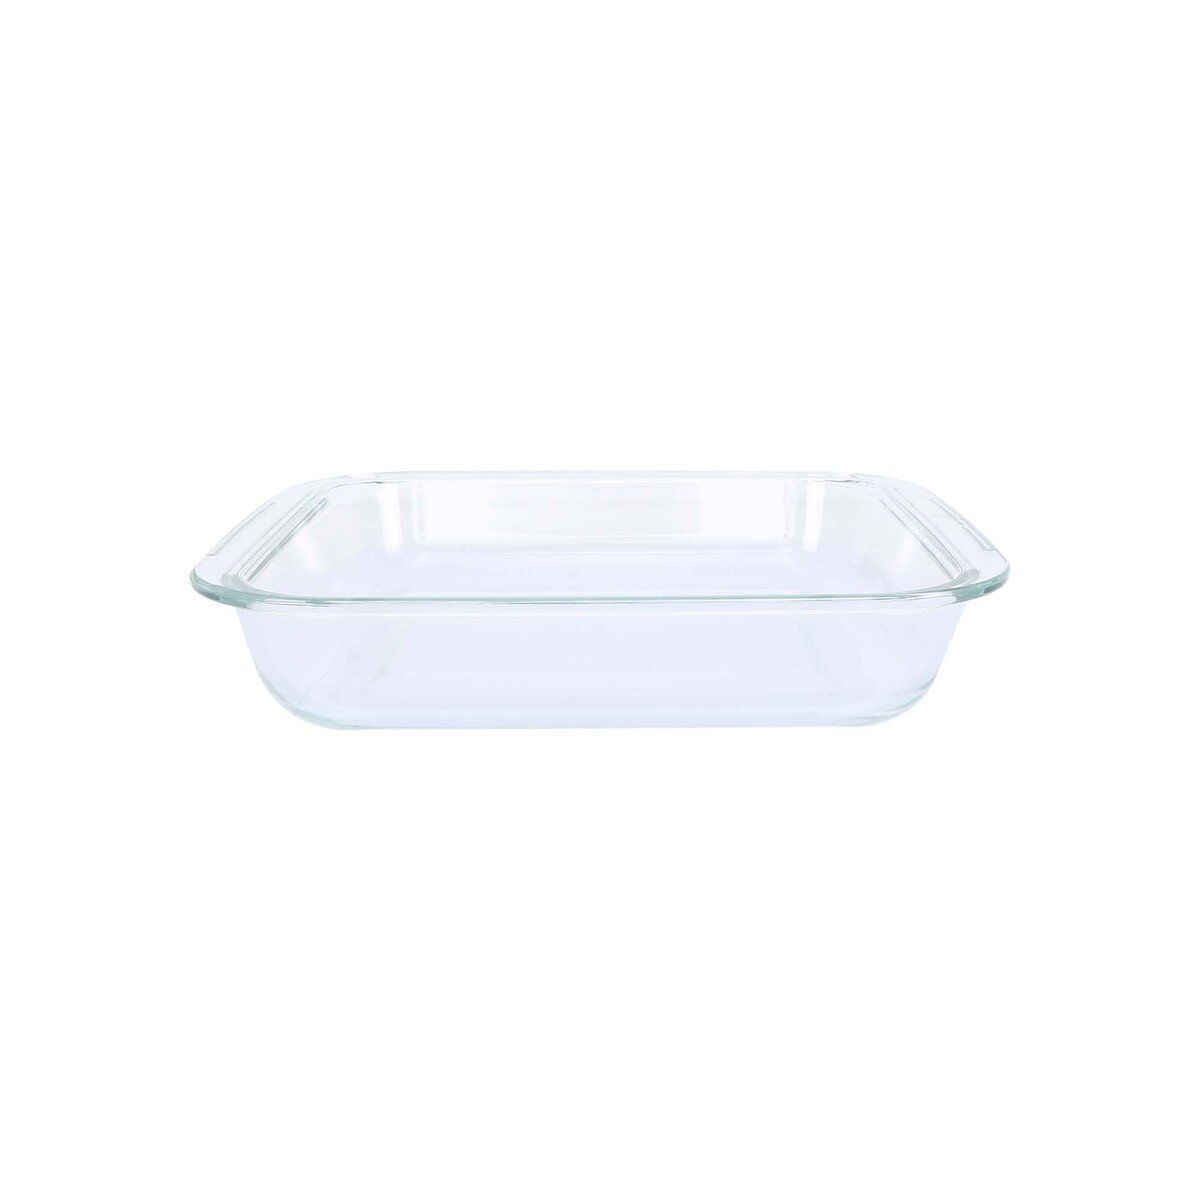 Chefline HSAP11LF Borosilicate Glass Square Baking Dish, 1.1 litre, Transparent